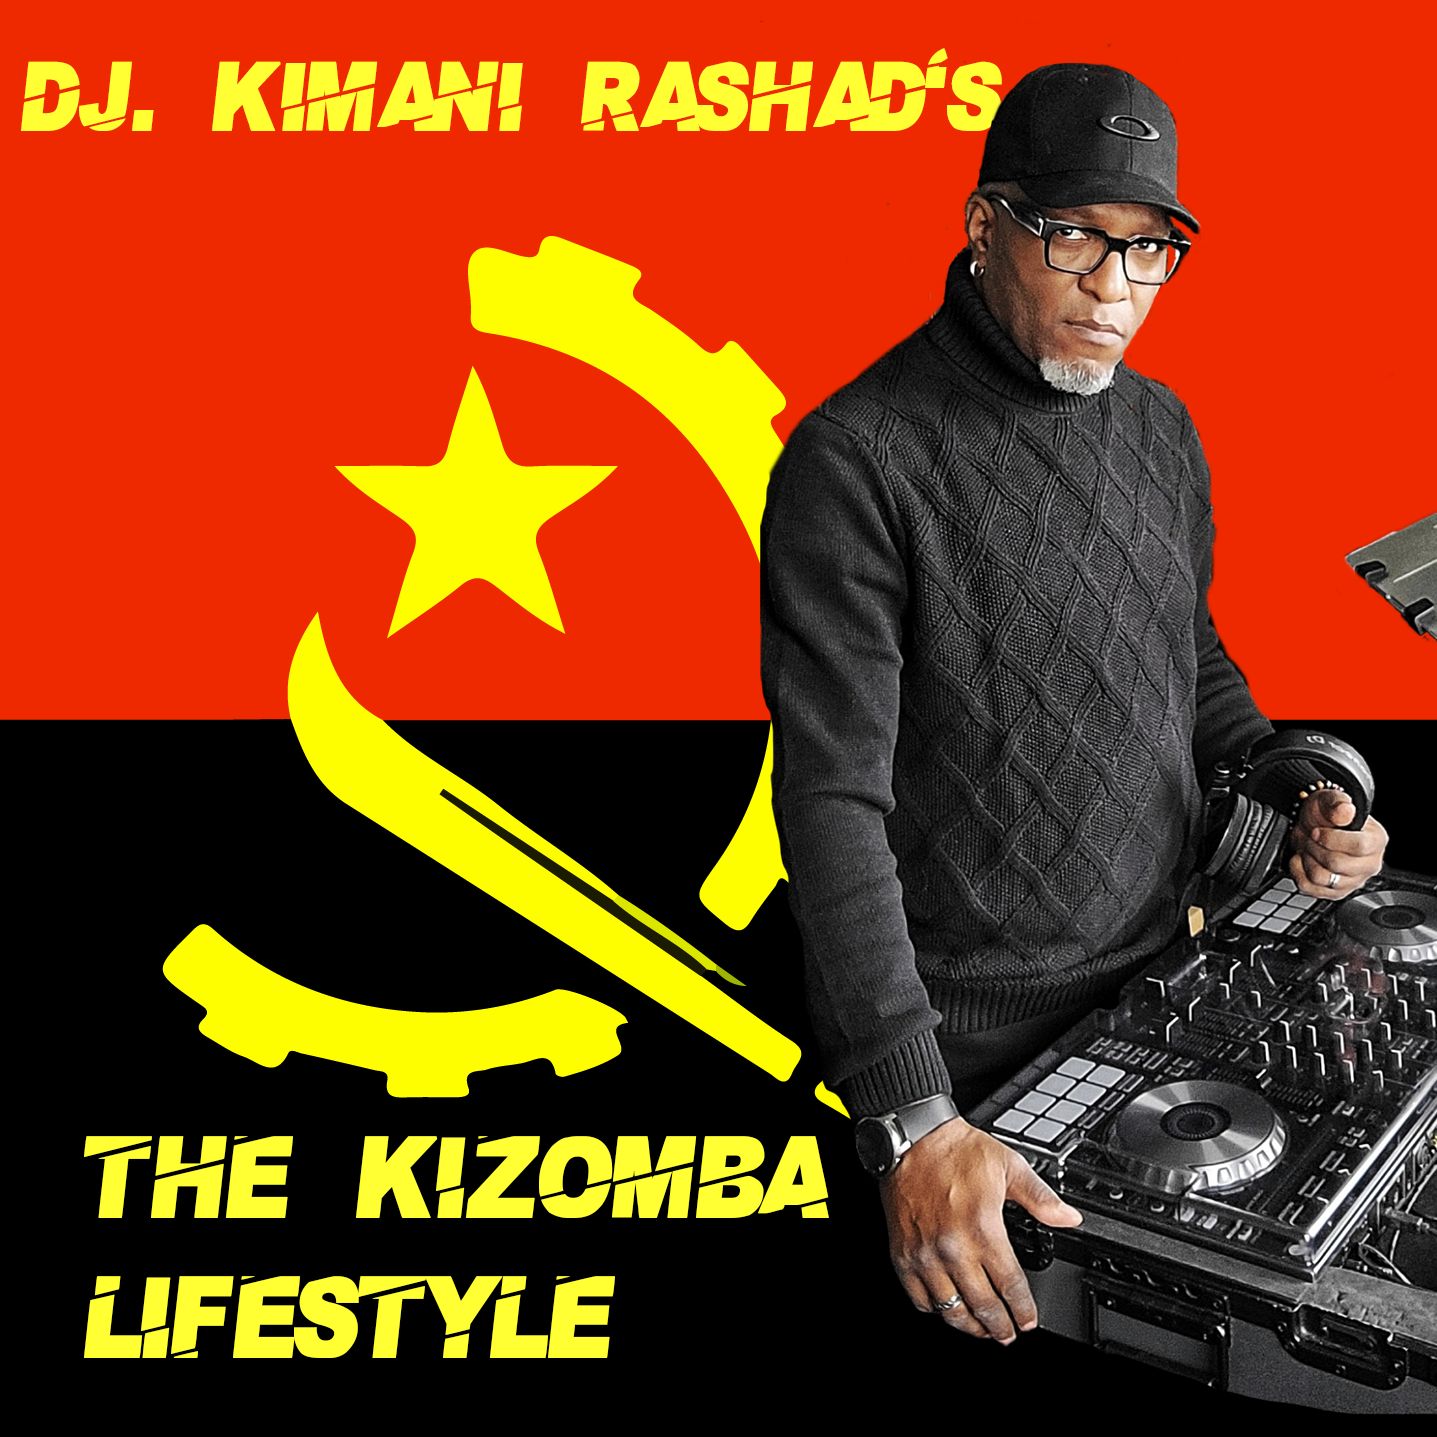 डाउनलोड करा THE KIZOMBA LIFESTYLE 2